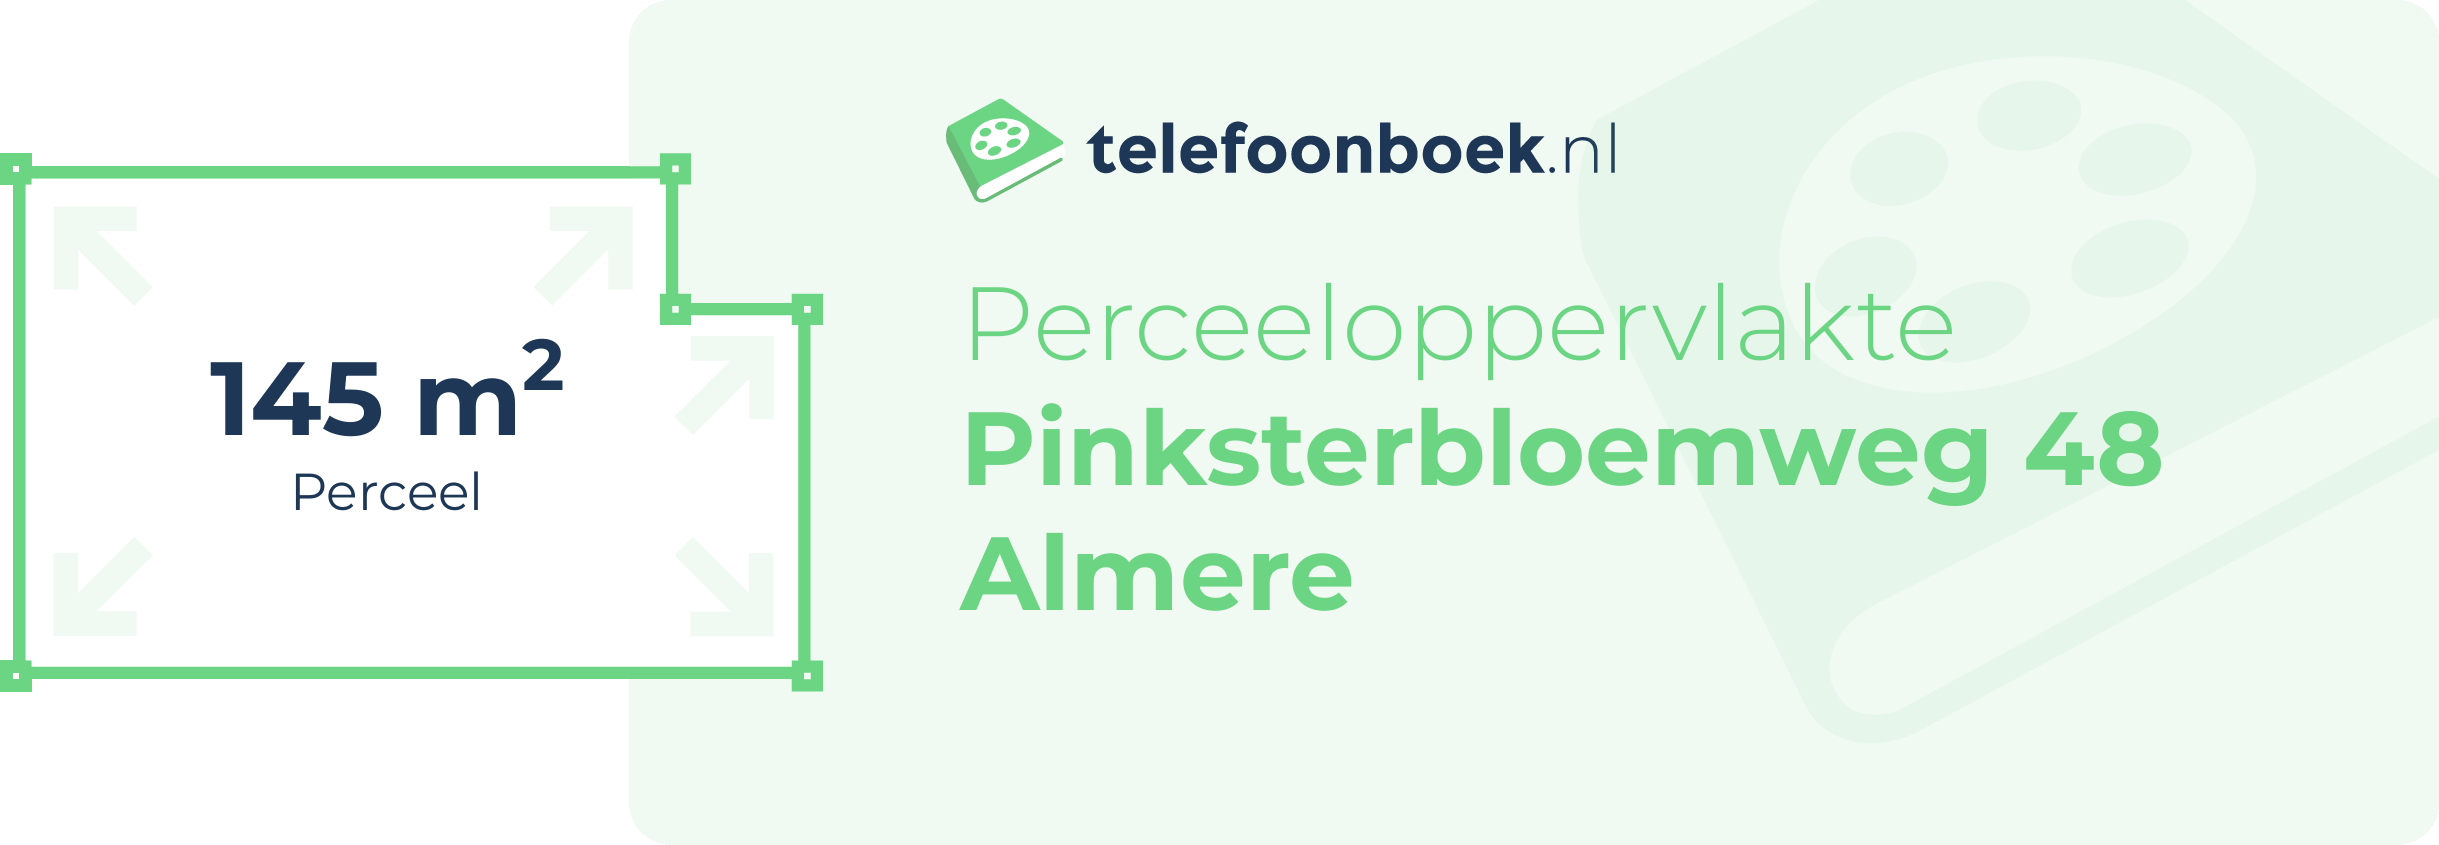 Perceeloppervlakte Pinksterbloemweg 48 Almere